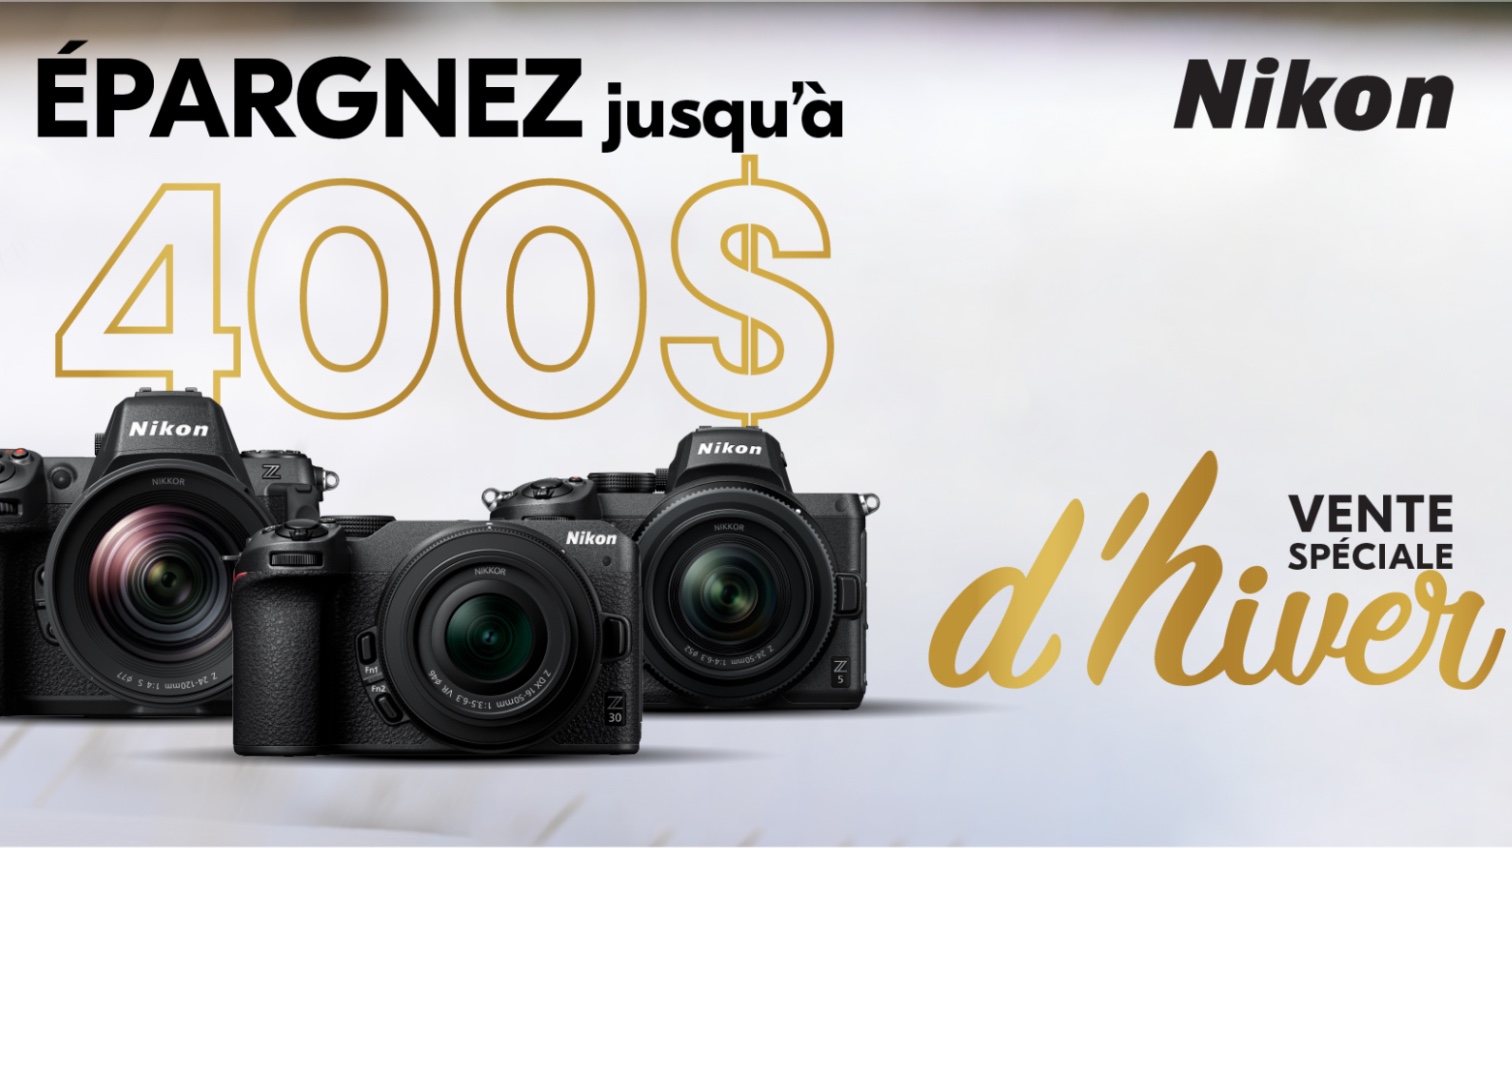 Grande promotion hivernale chez Nikon